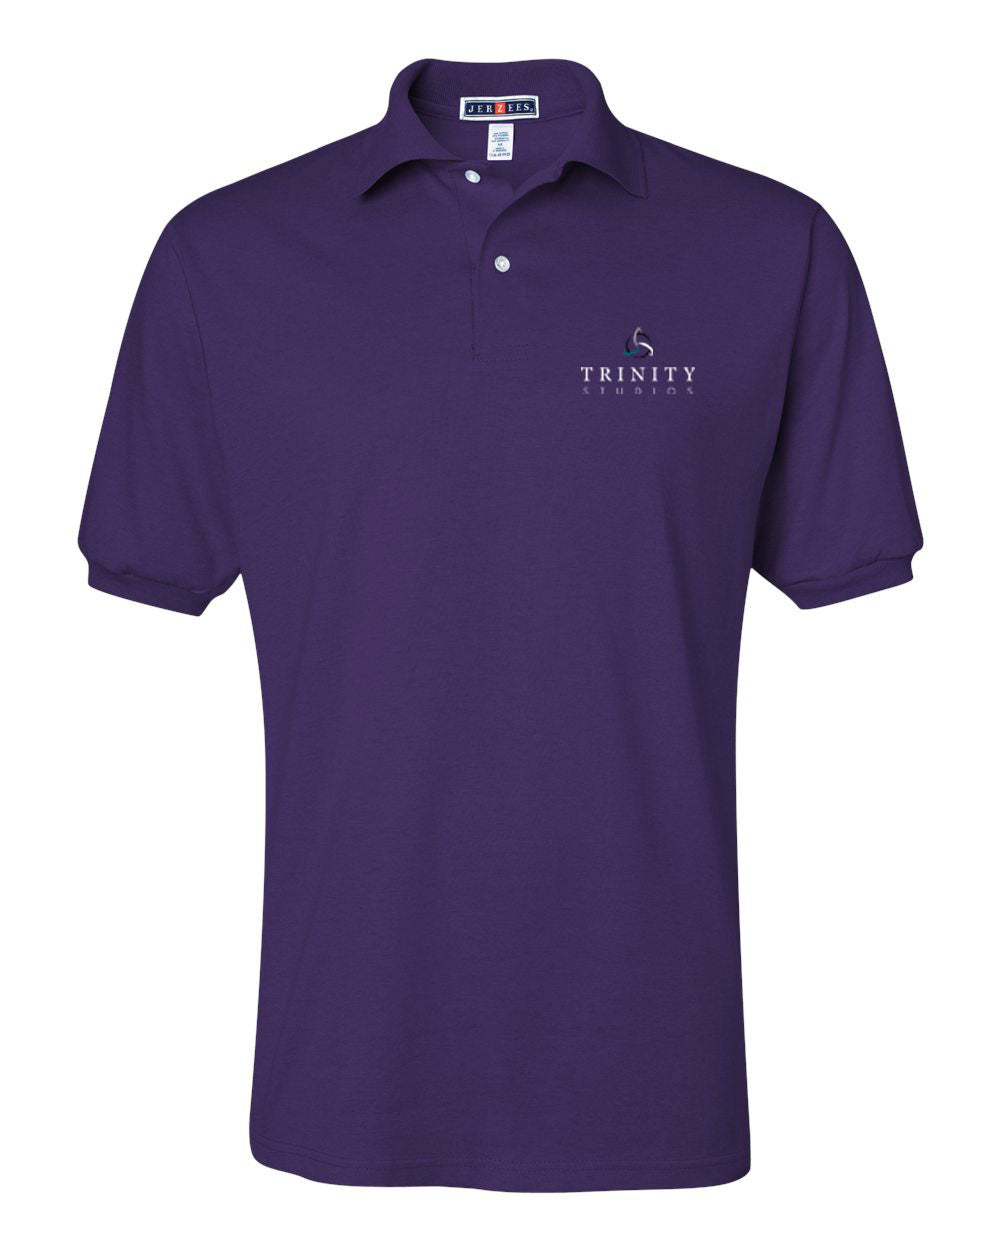 Trinity Design 6 Polo T-Shirt